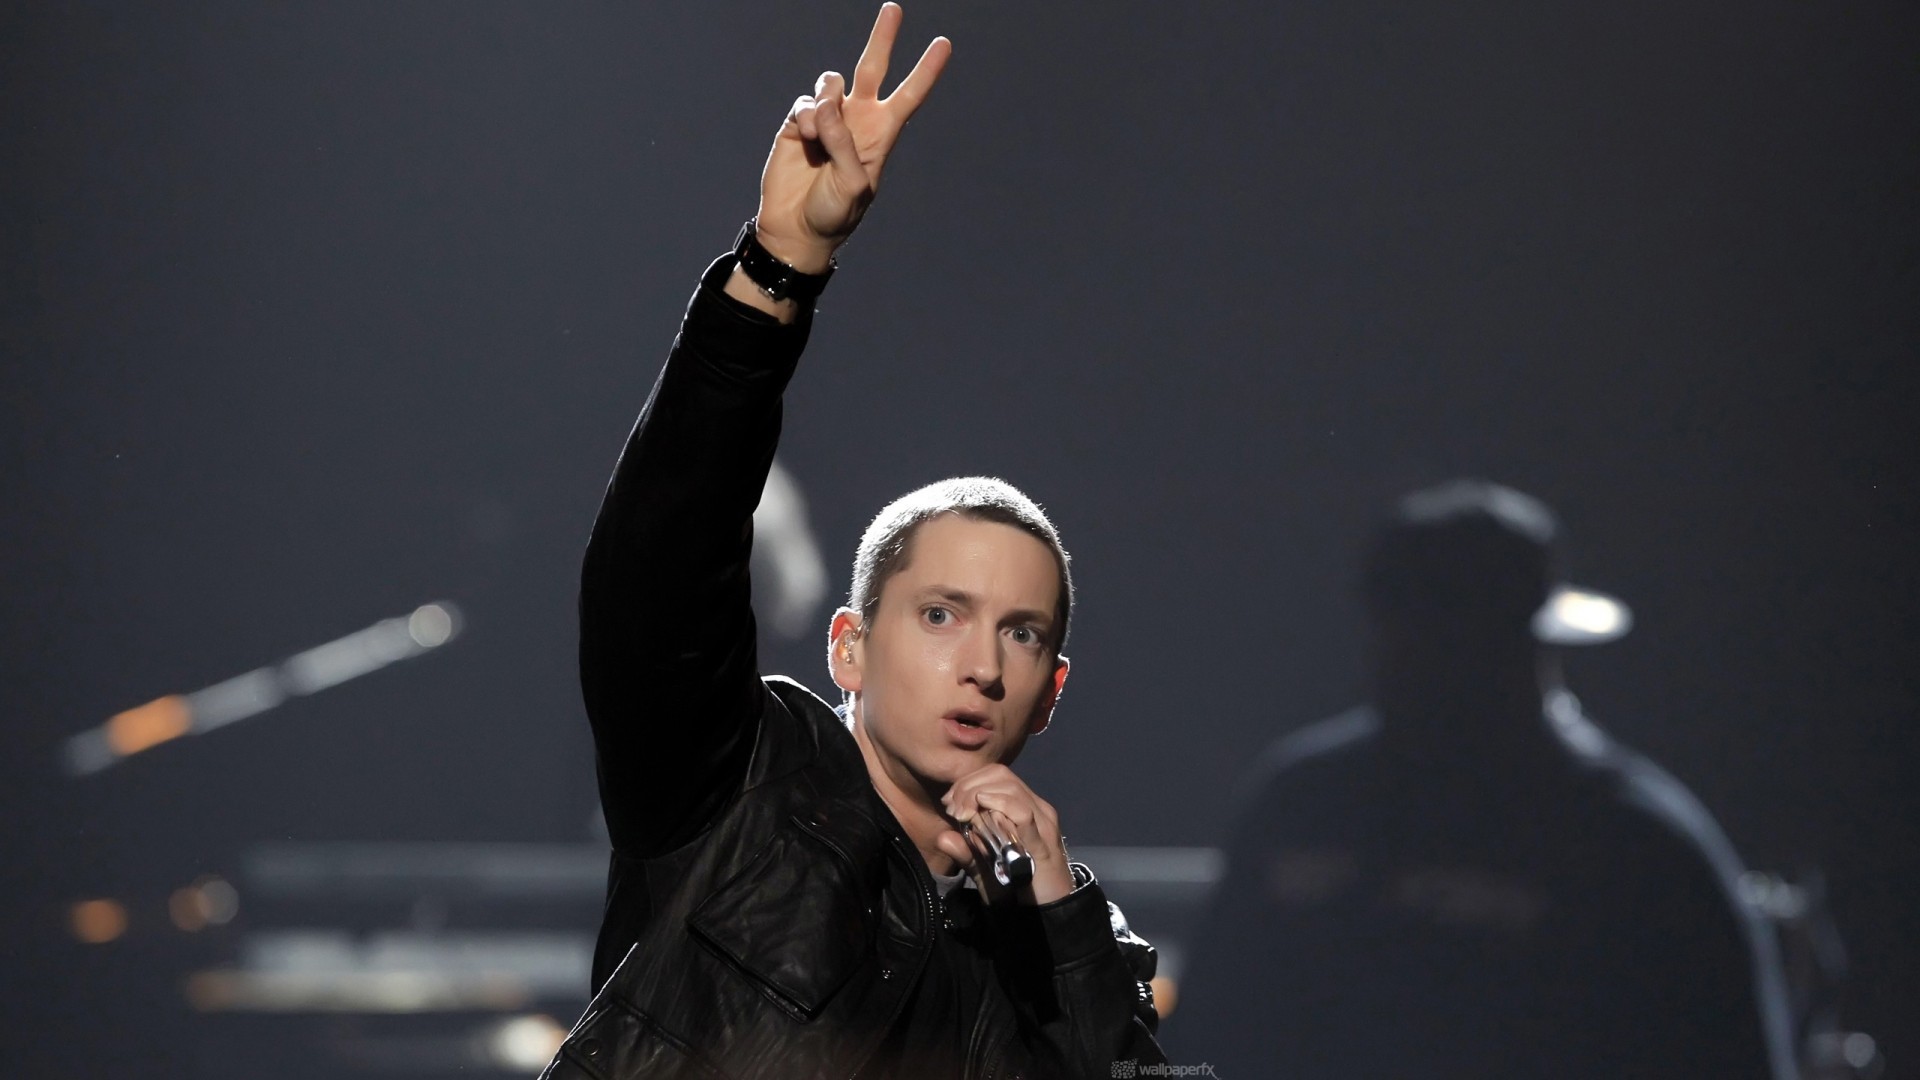 People 1920x1080 Eminem men music hand gesture Rapper